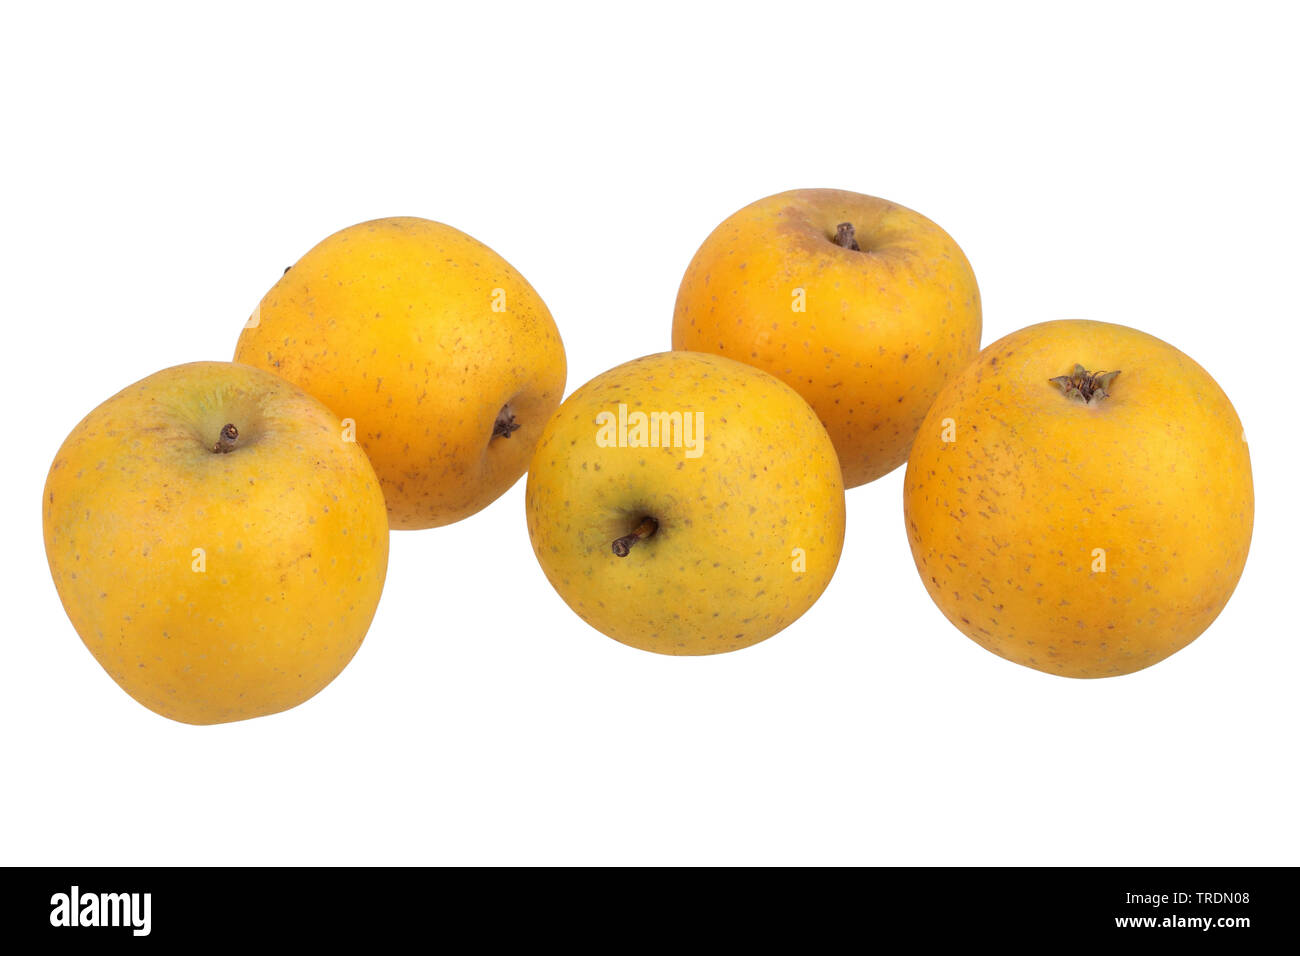 apple (Malus domestica 'Ananasrenette', Malus domestica Ananasrenette), apples of the cultivar Ananasrenette Stock Photo